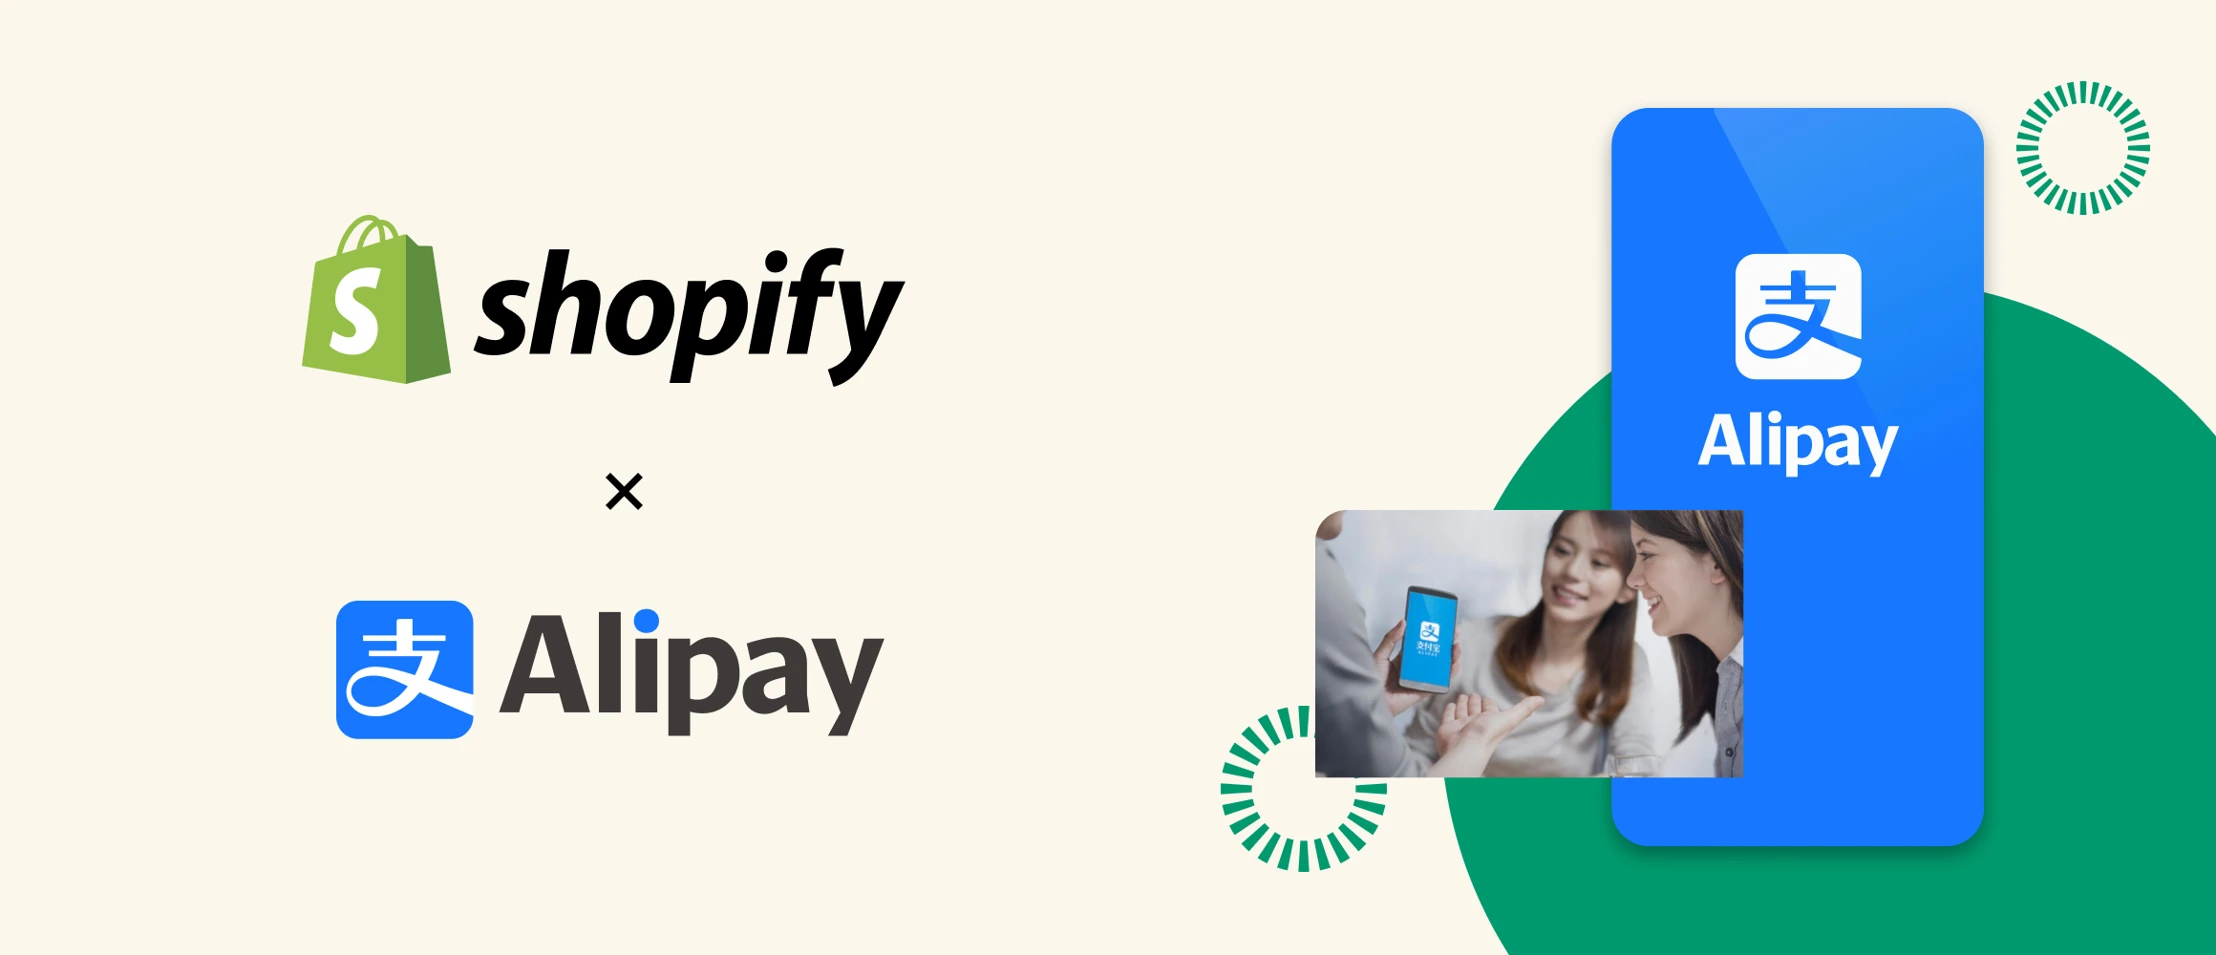 Shopify与支付宝建立合作